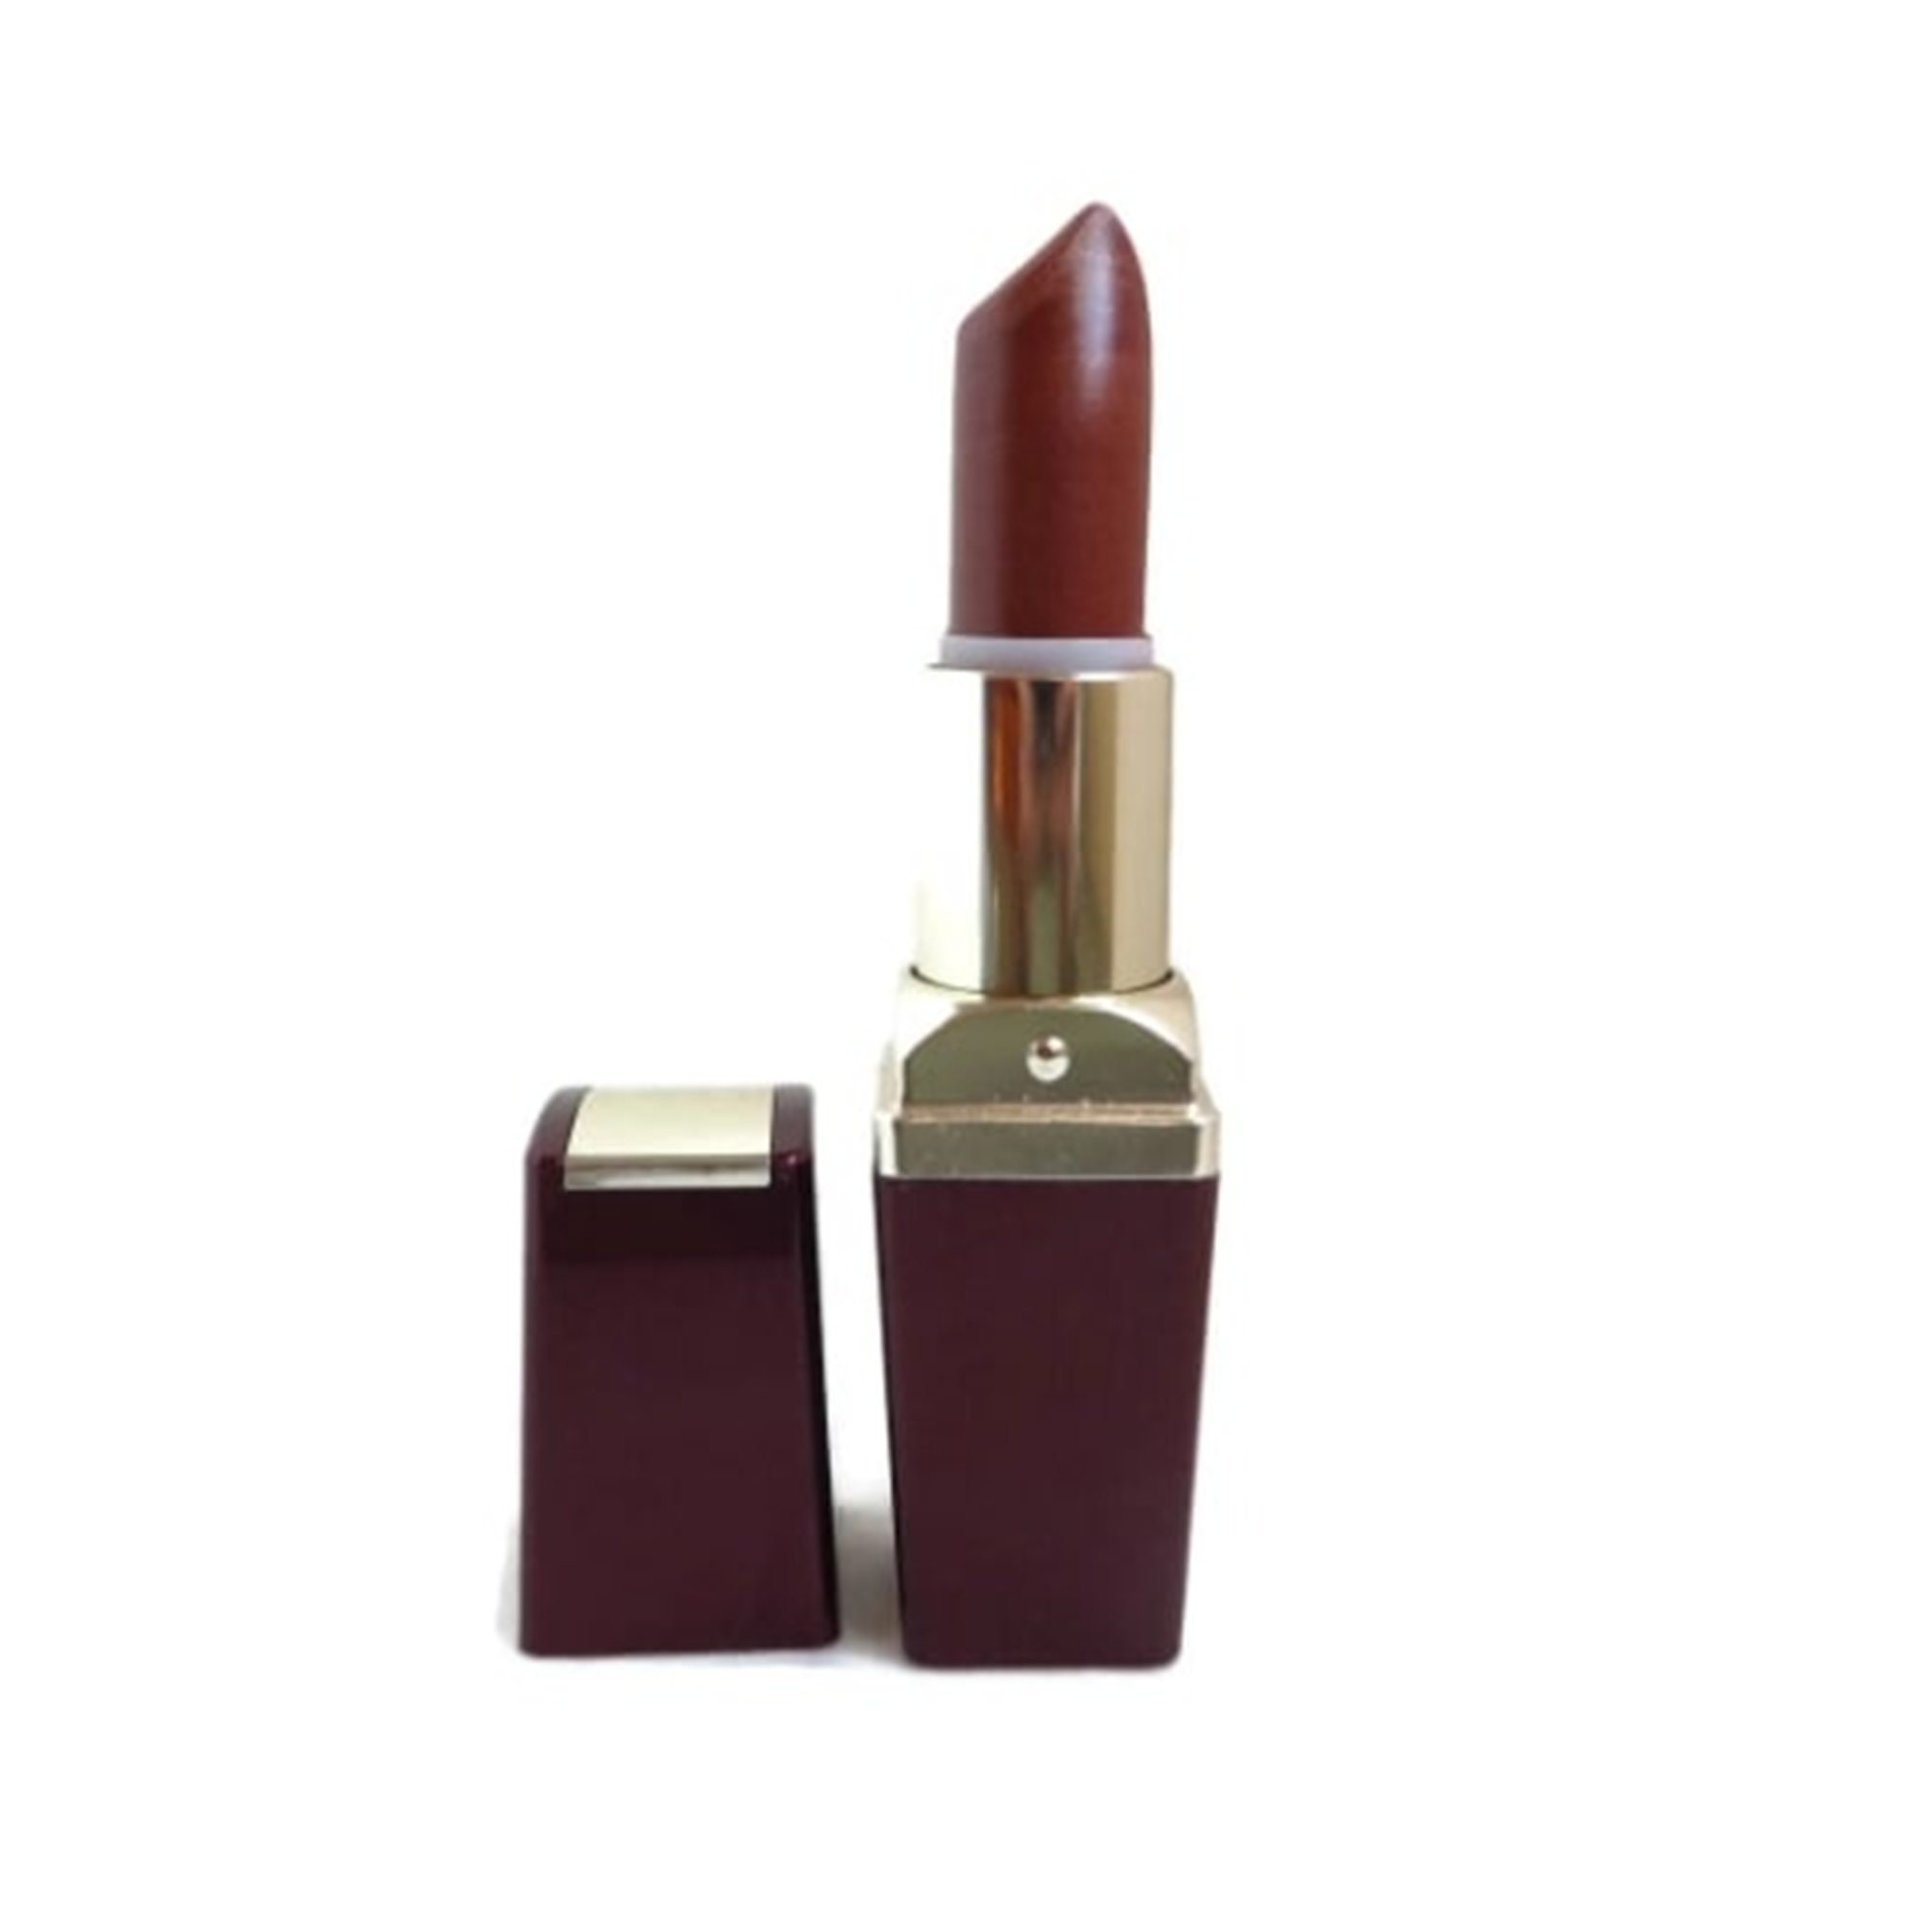 Vintage Avon Lipstick, Double Impact Lip Color Topaz, FOR DISPLAY